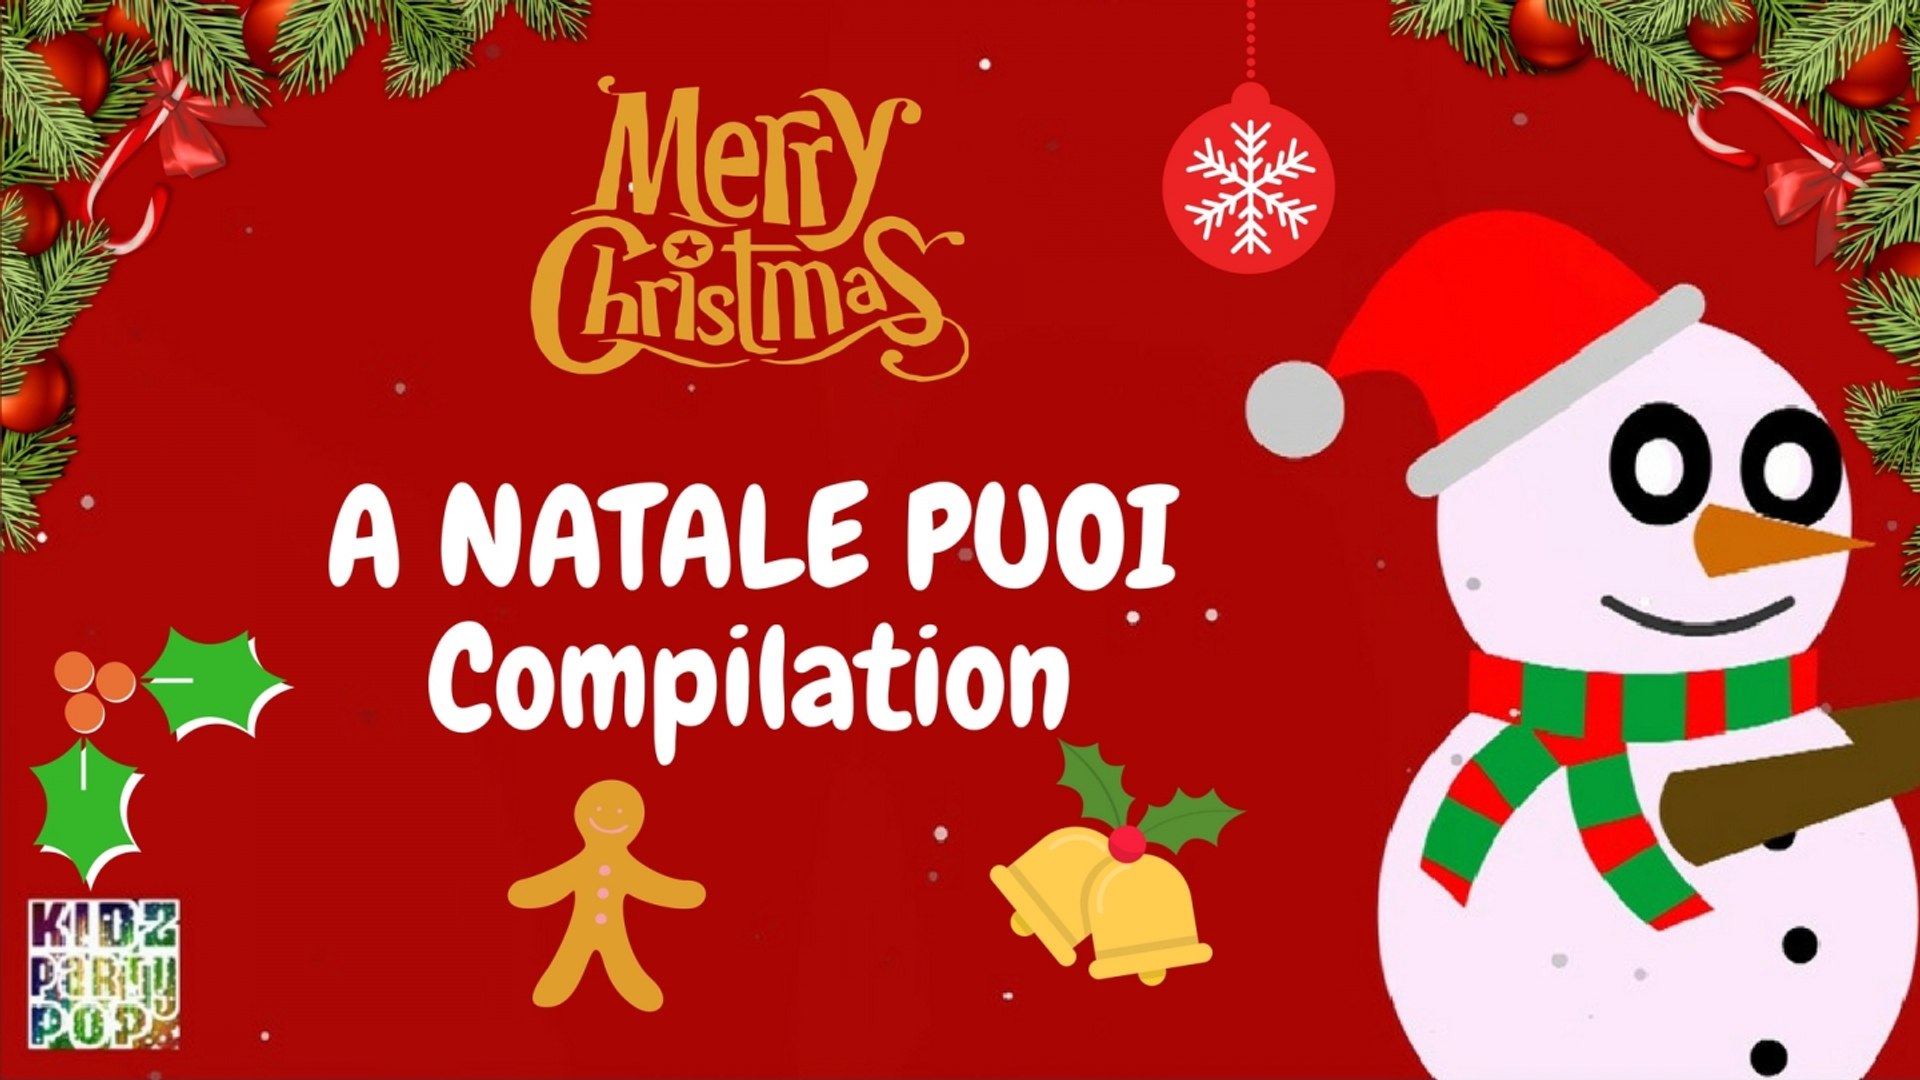 Canzoni In Inglese Di Natale.Le Piu Belle Canzoni Di Natale A Natale Puoi Compilation Video Dailymotion